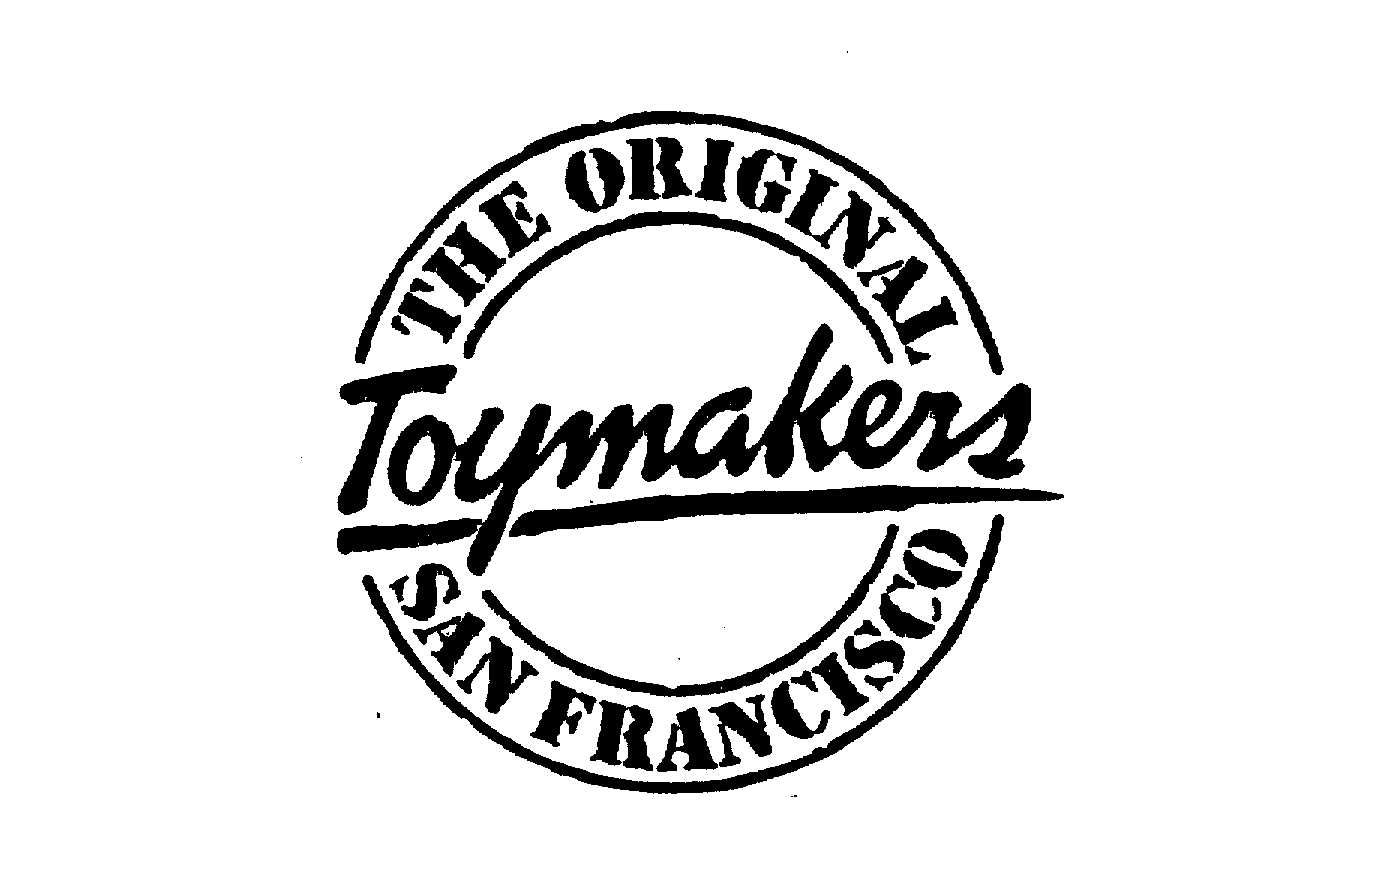  THE ORIGINAL SAN FRANCISCO TOYMAKERS